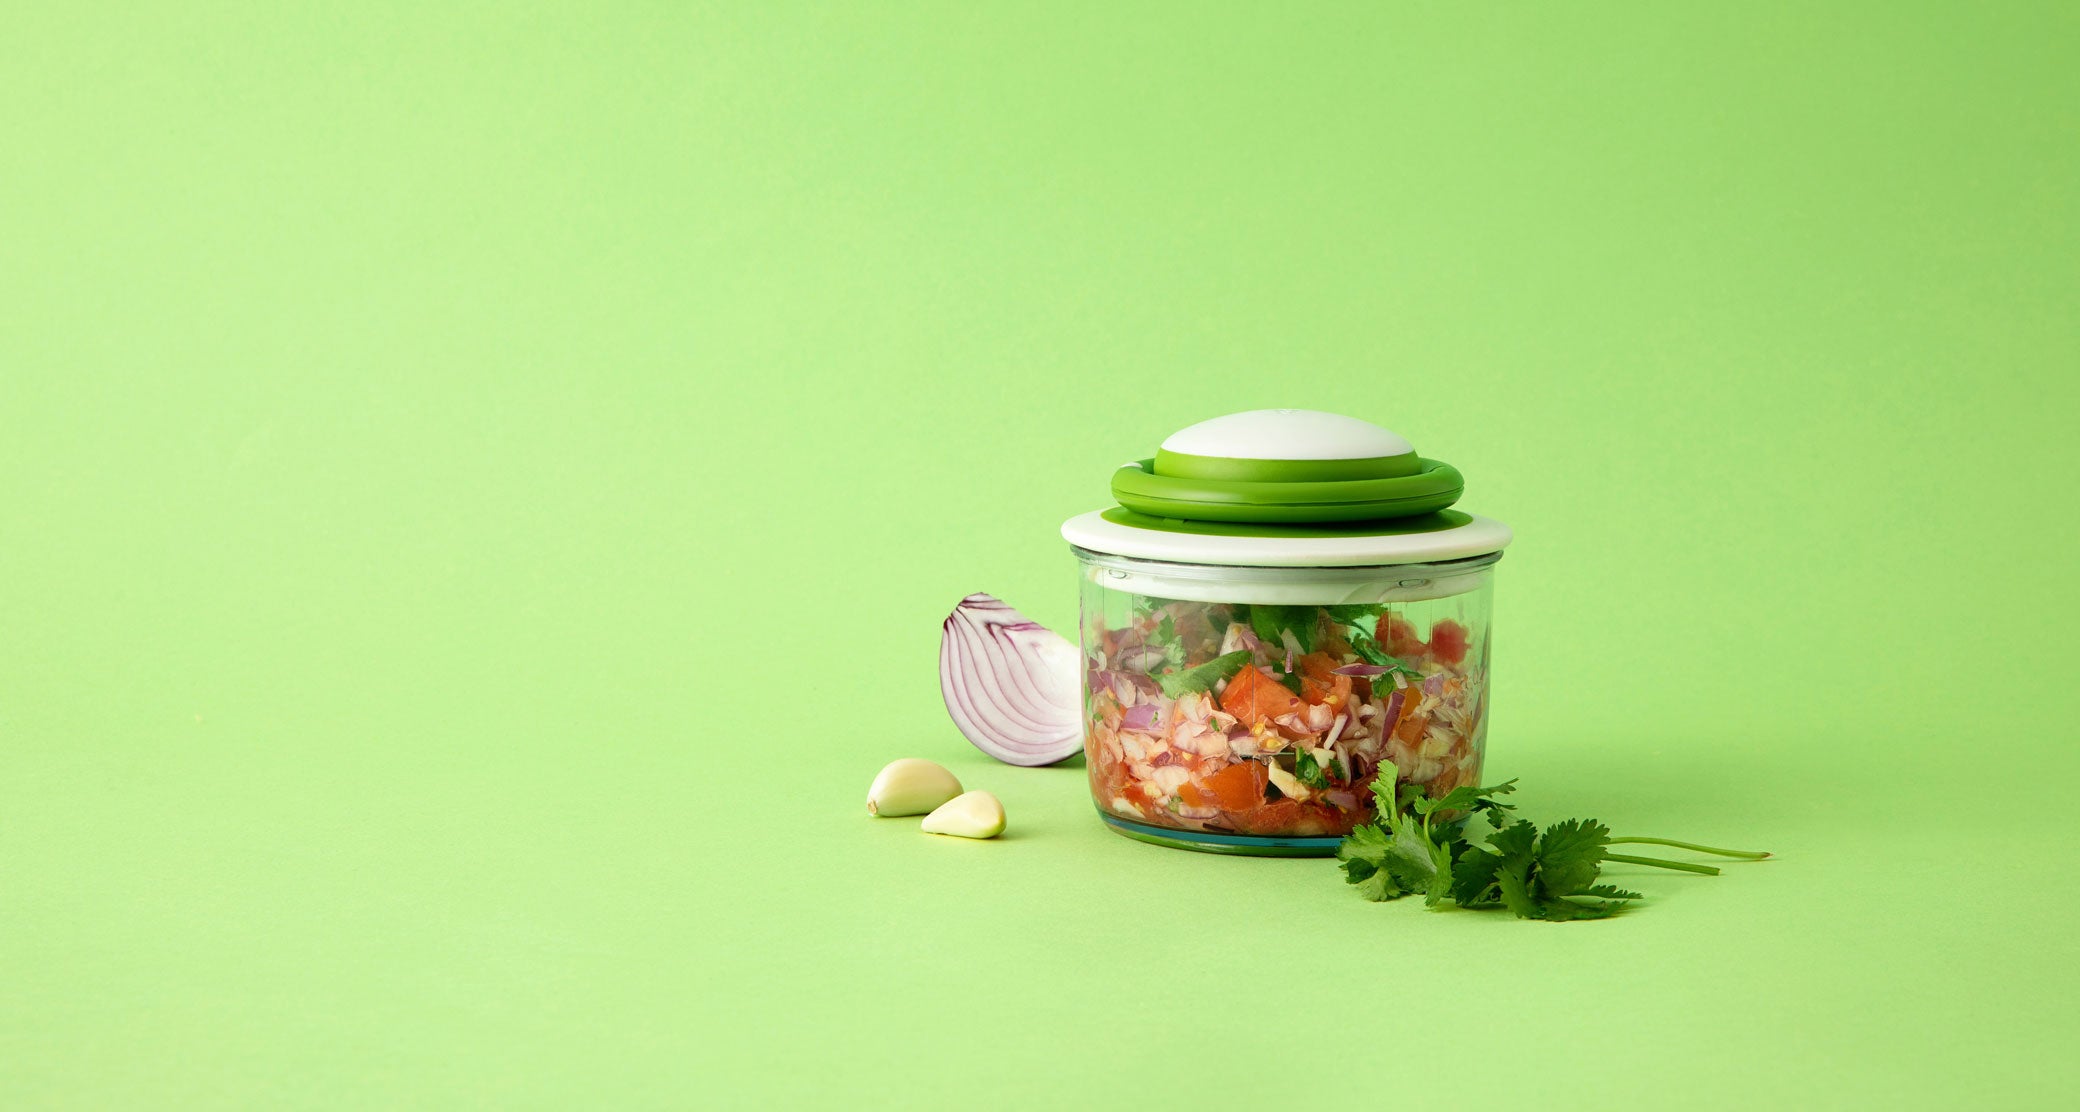 Chef'n Saladshears Salad Chopper